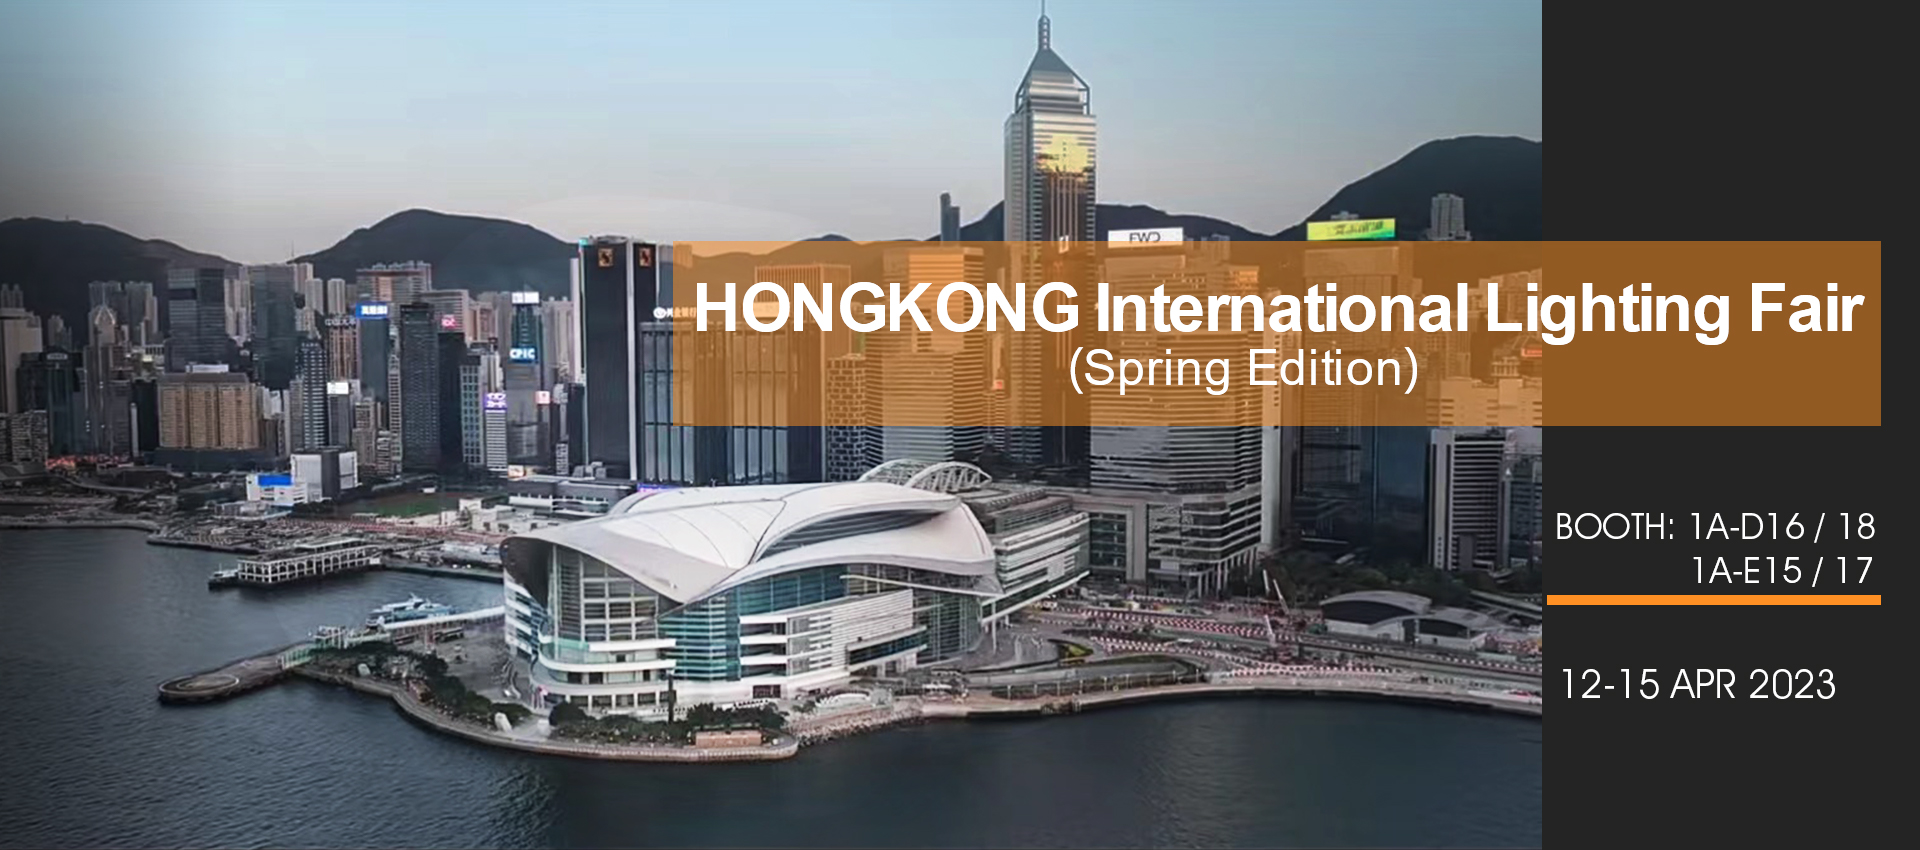 2023 Hong Kong International Lighting Fair (Spring Edition)